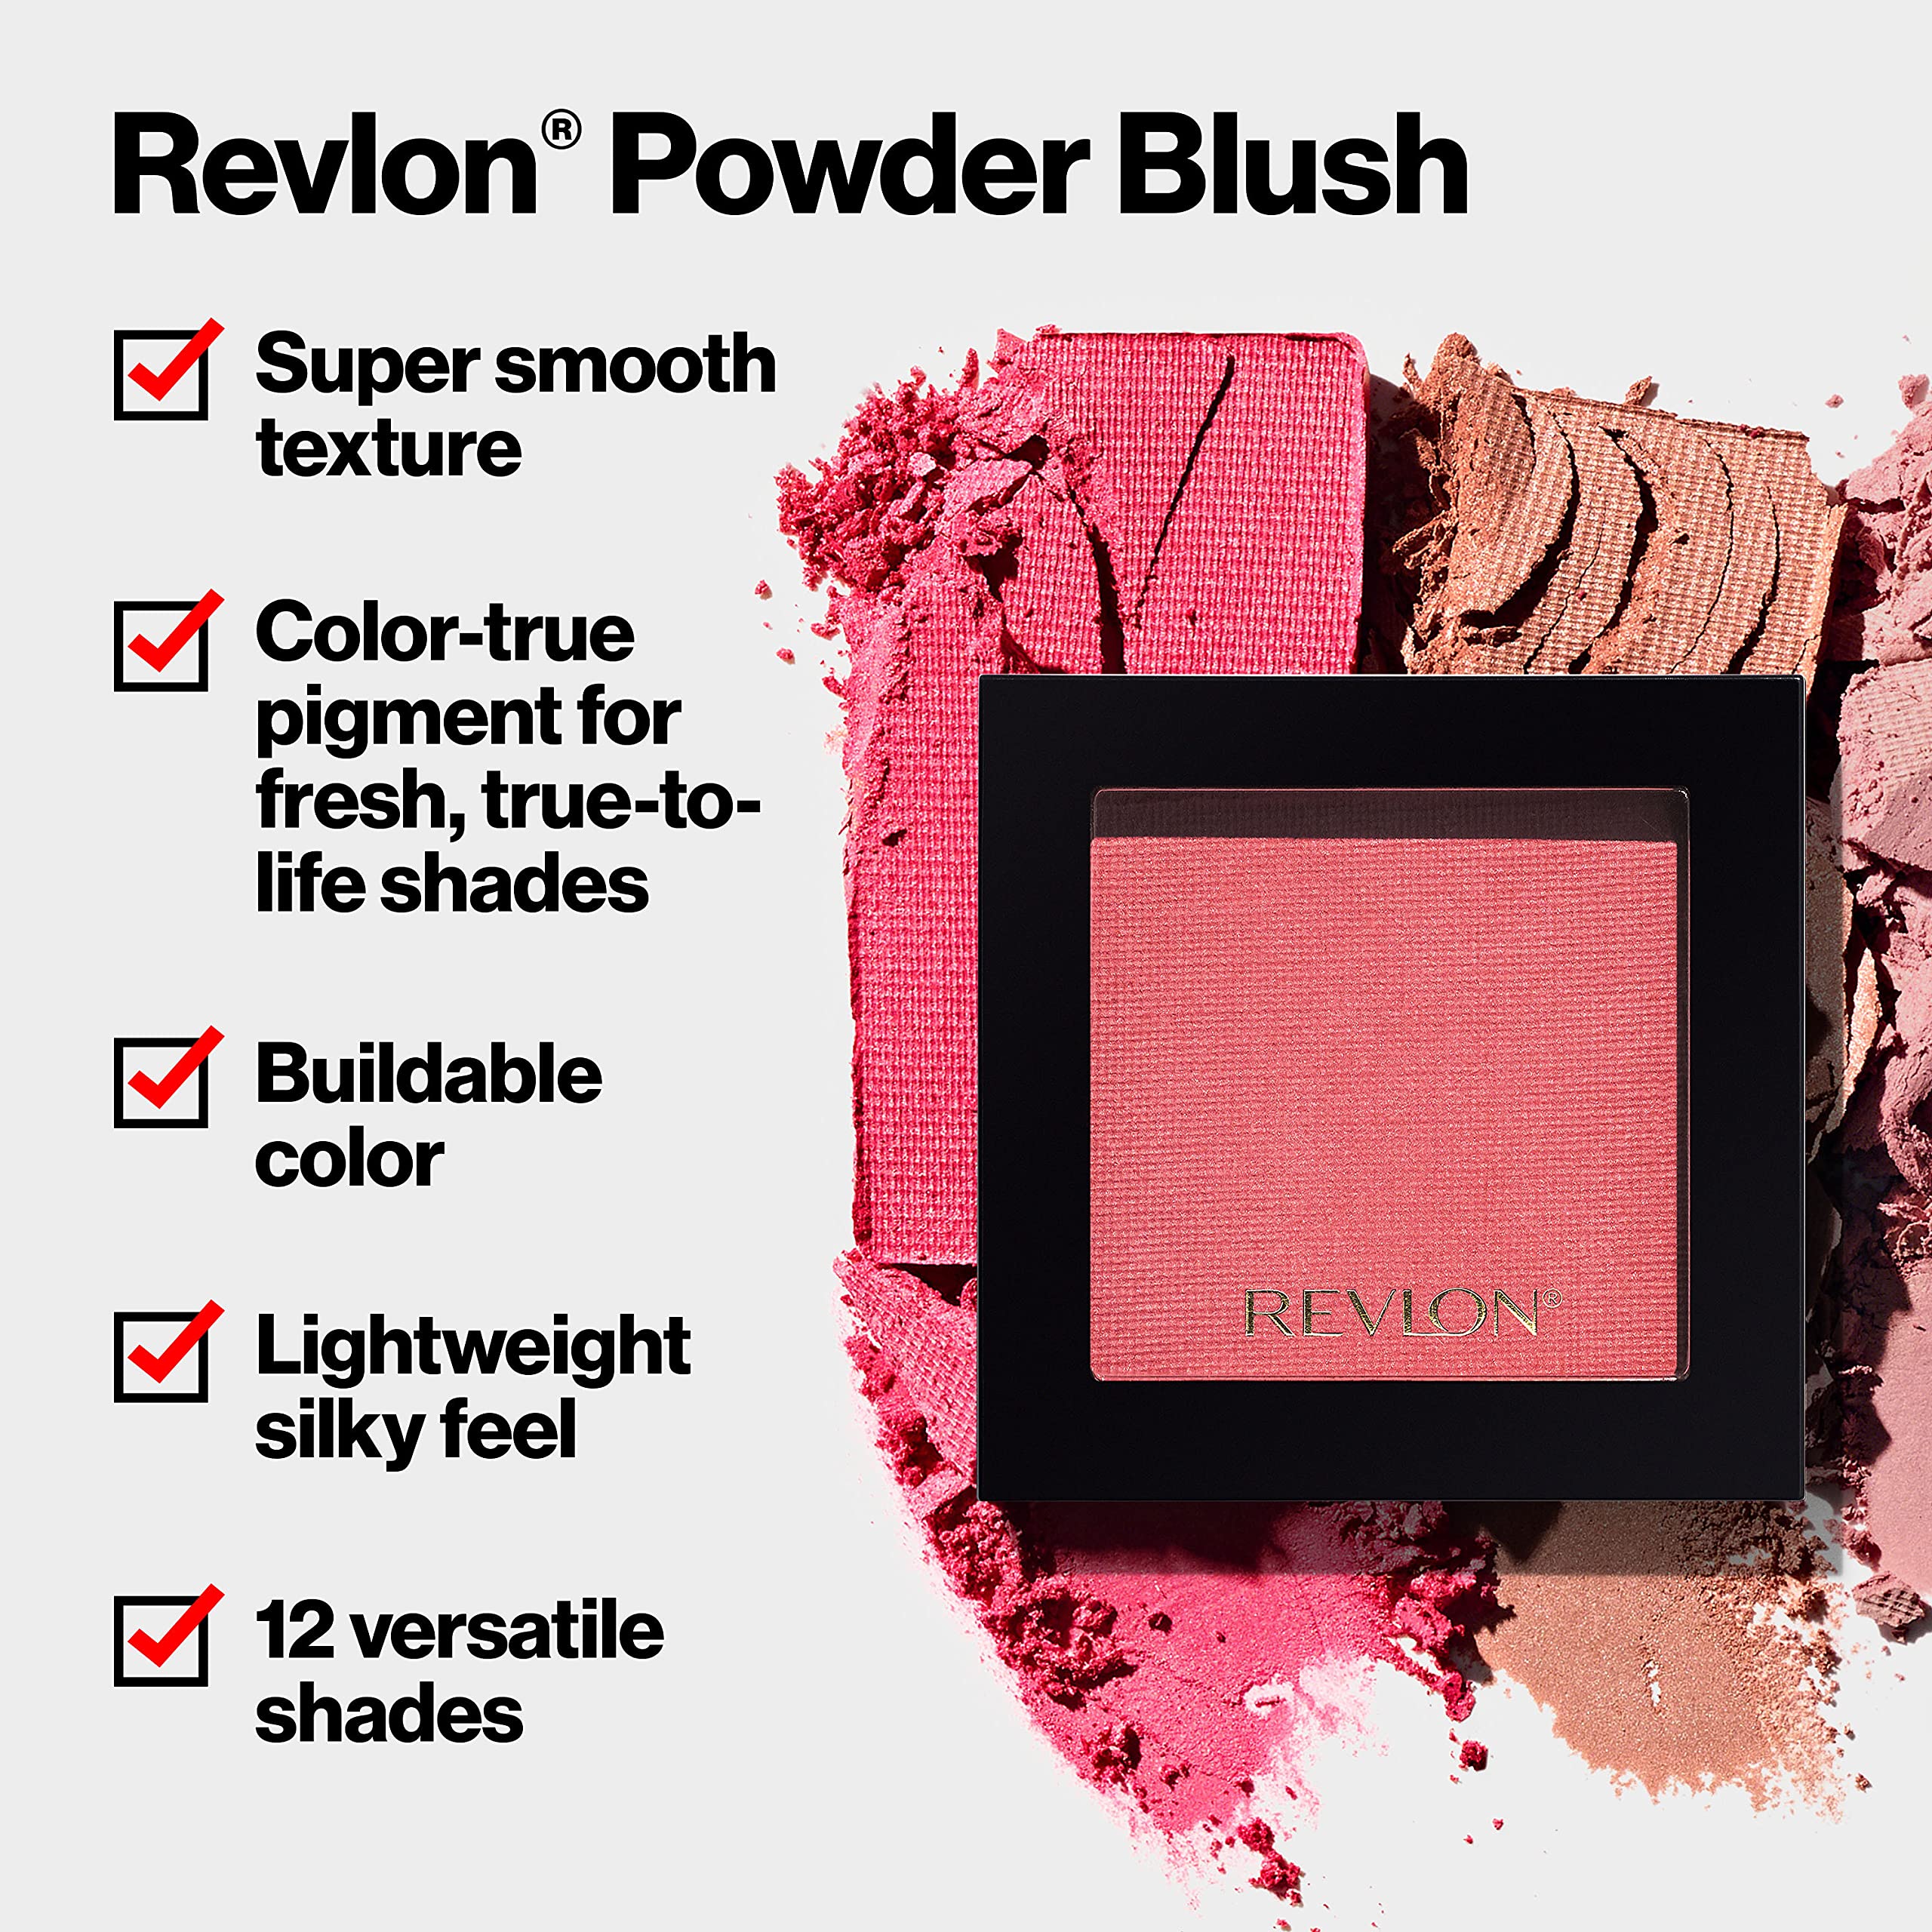 REVLON Powder Blush